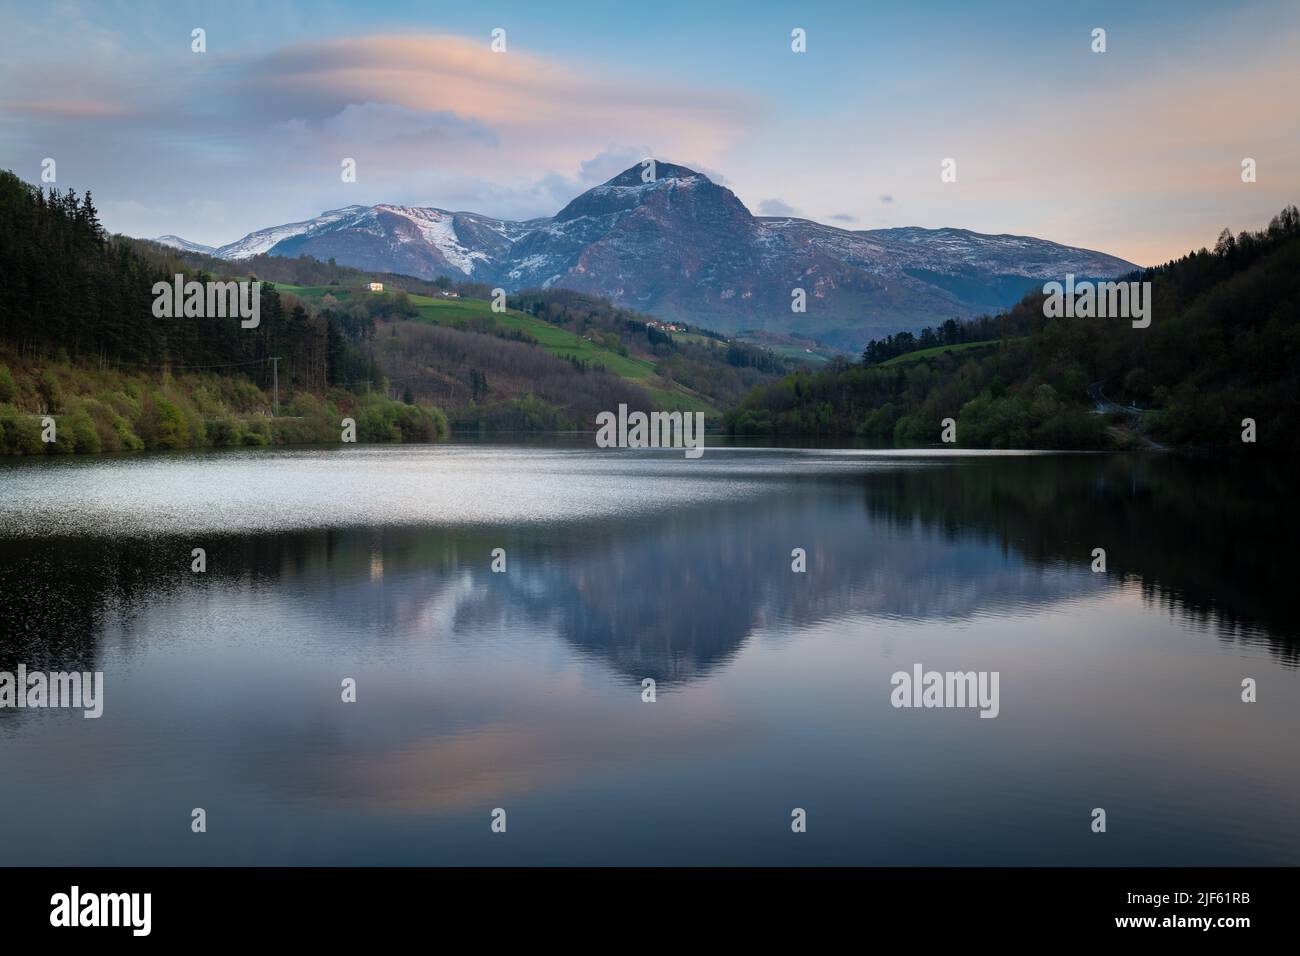 Ibiur bacino con Txindoki montagna come sfondo, Paesi Baschi in Spagna Foto Stock